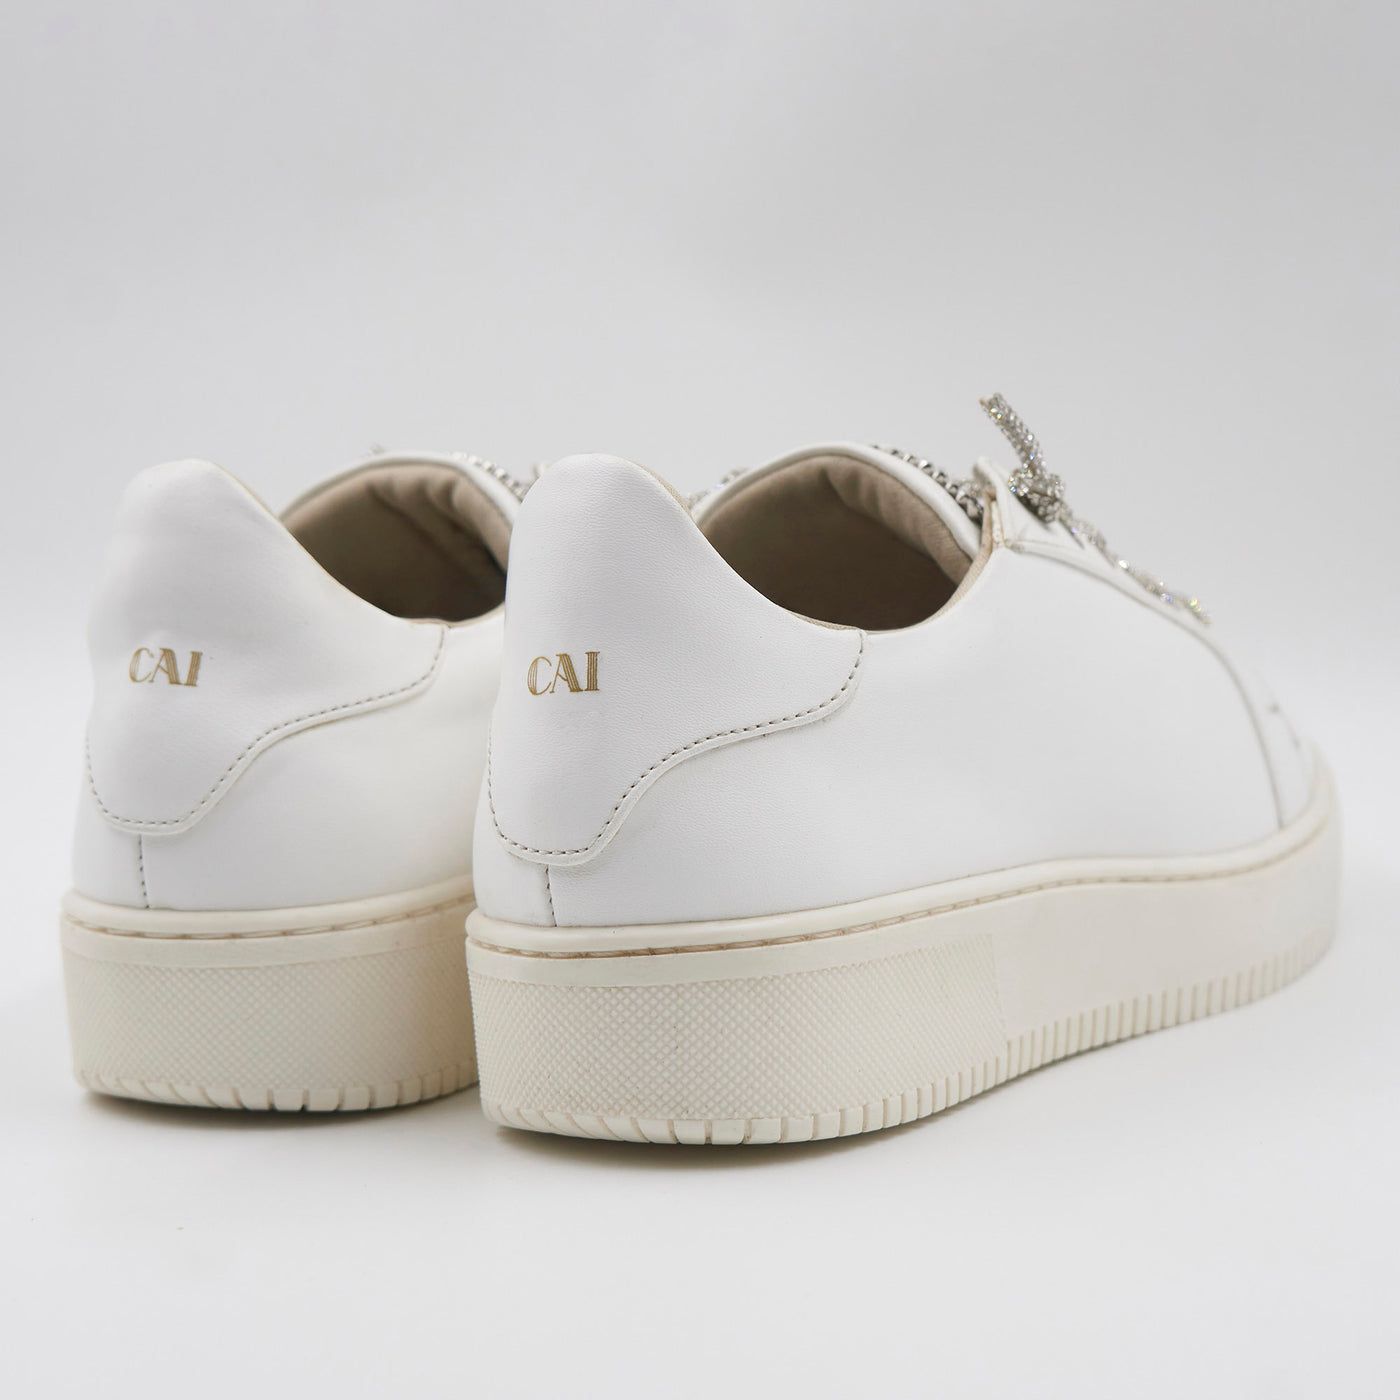 Diamond Lace-Up Sneaker - White